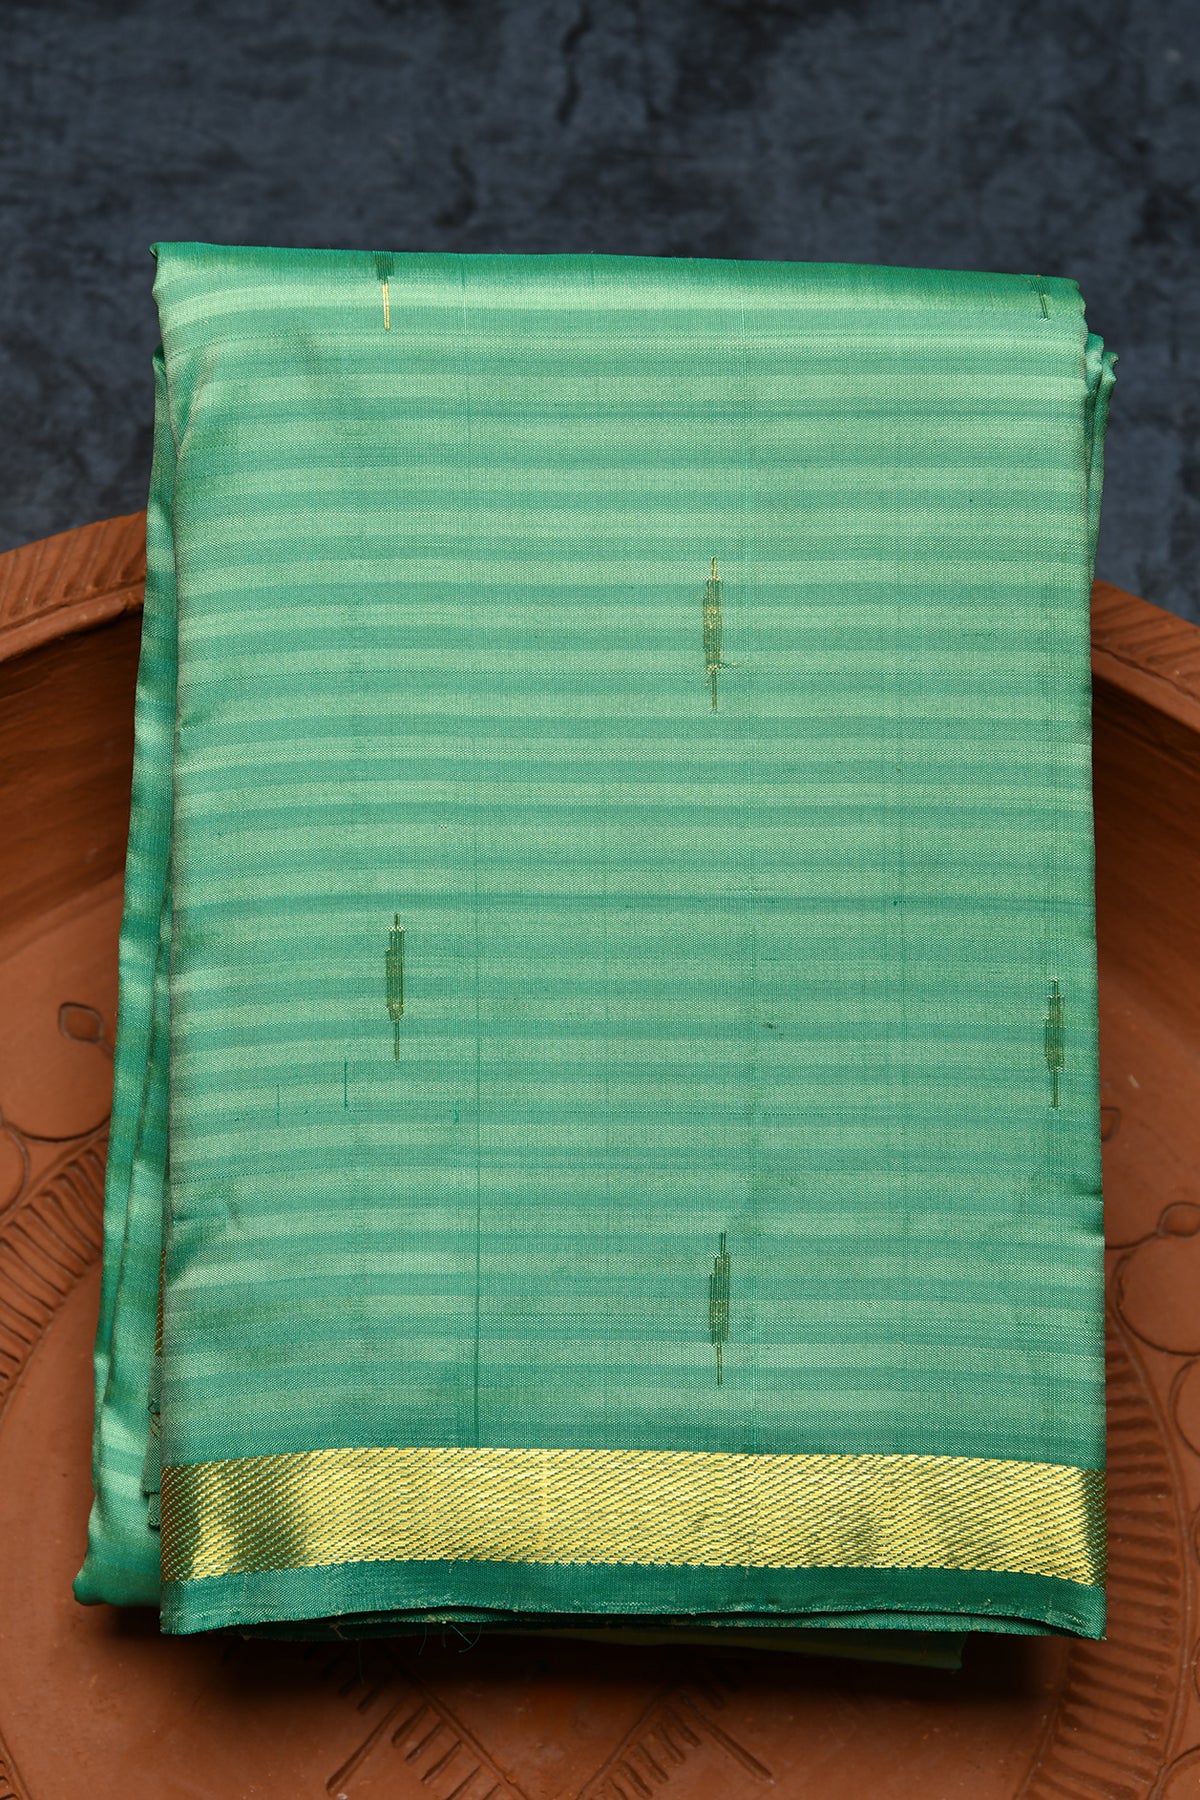 Small Zari Border With Monochrome Stripes And Rain Drops Mint Green Kanchipuram Silk Saree